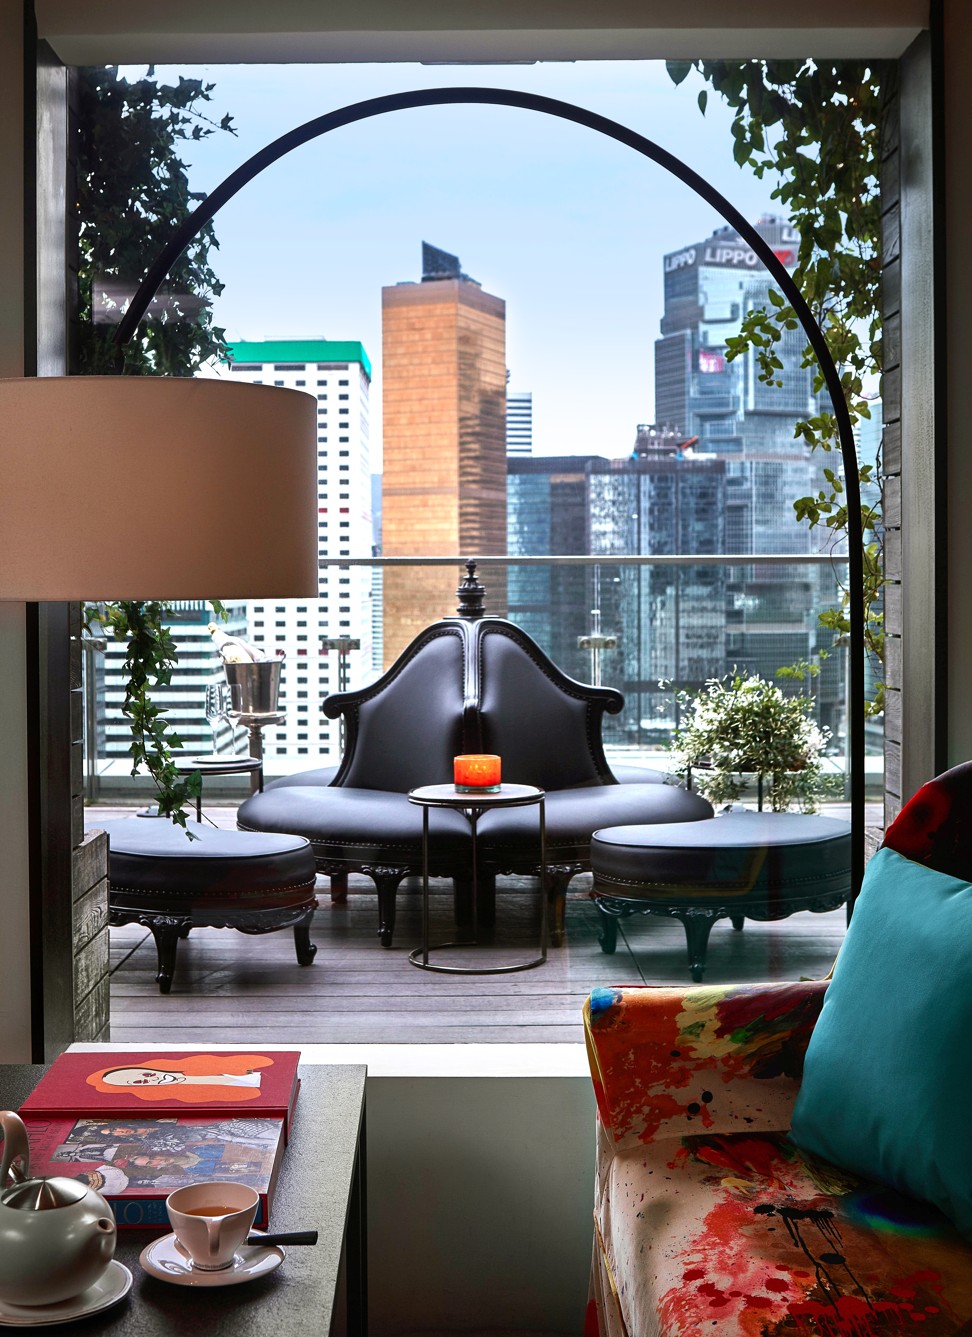 SEVVA’s interior lounge overlooking the terrace.